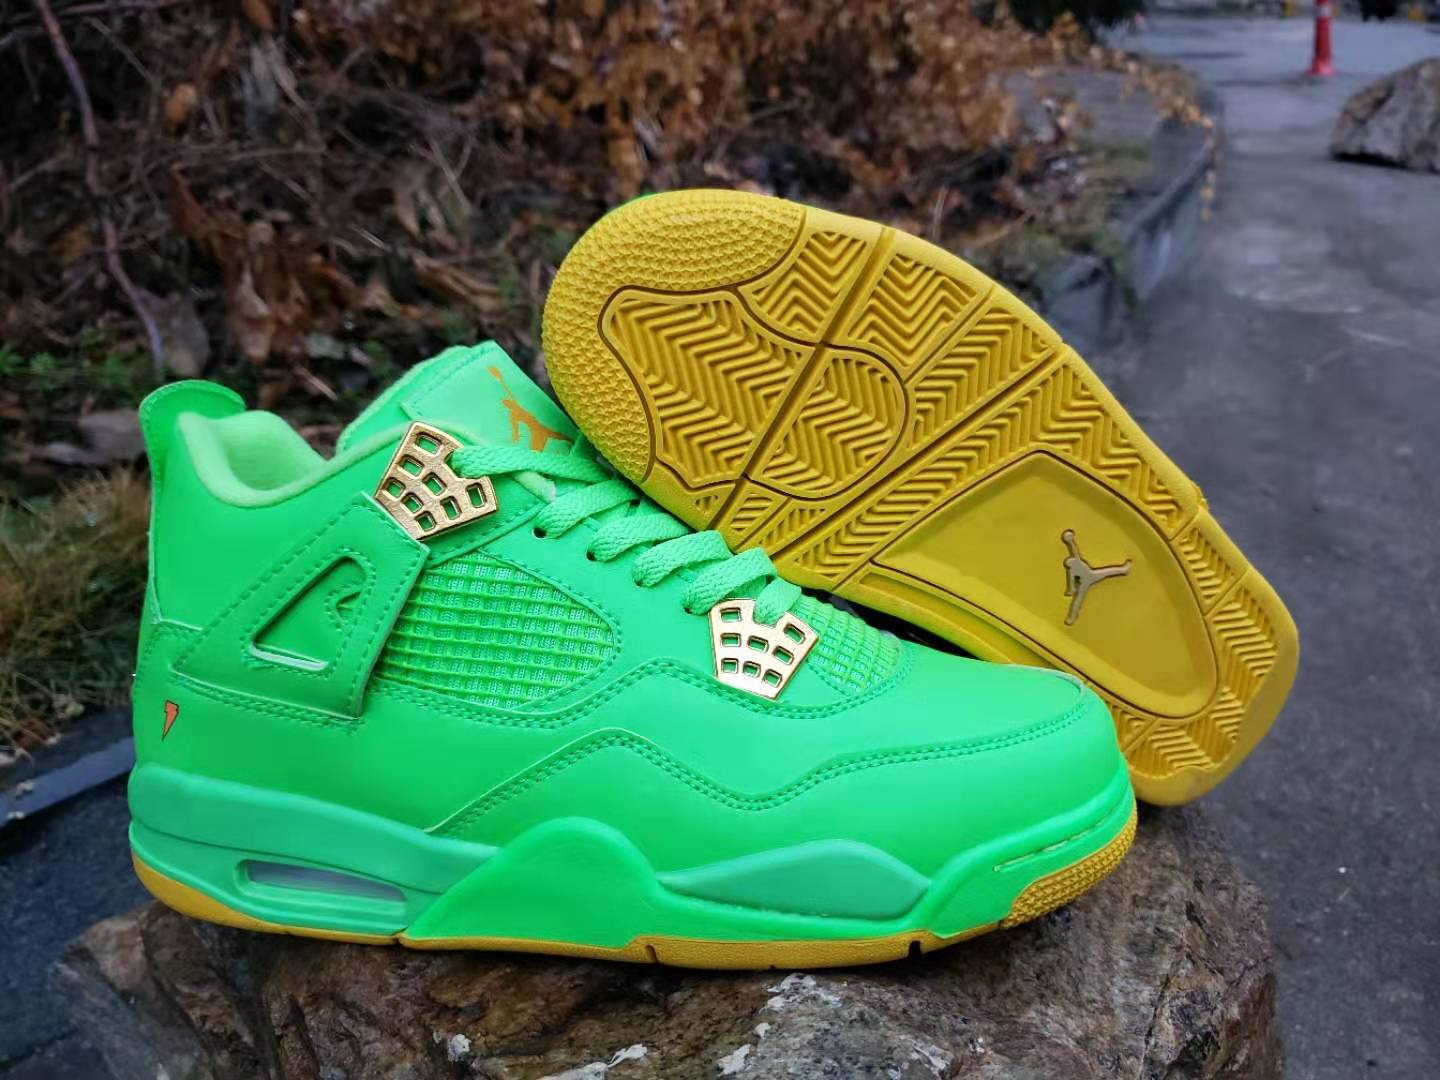 New Air Jordan 4 Retro Dark Green Yellow Shoes